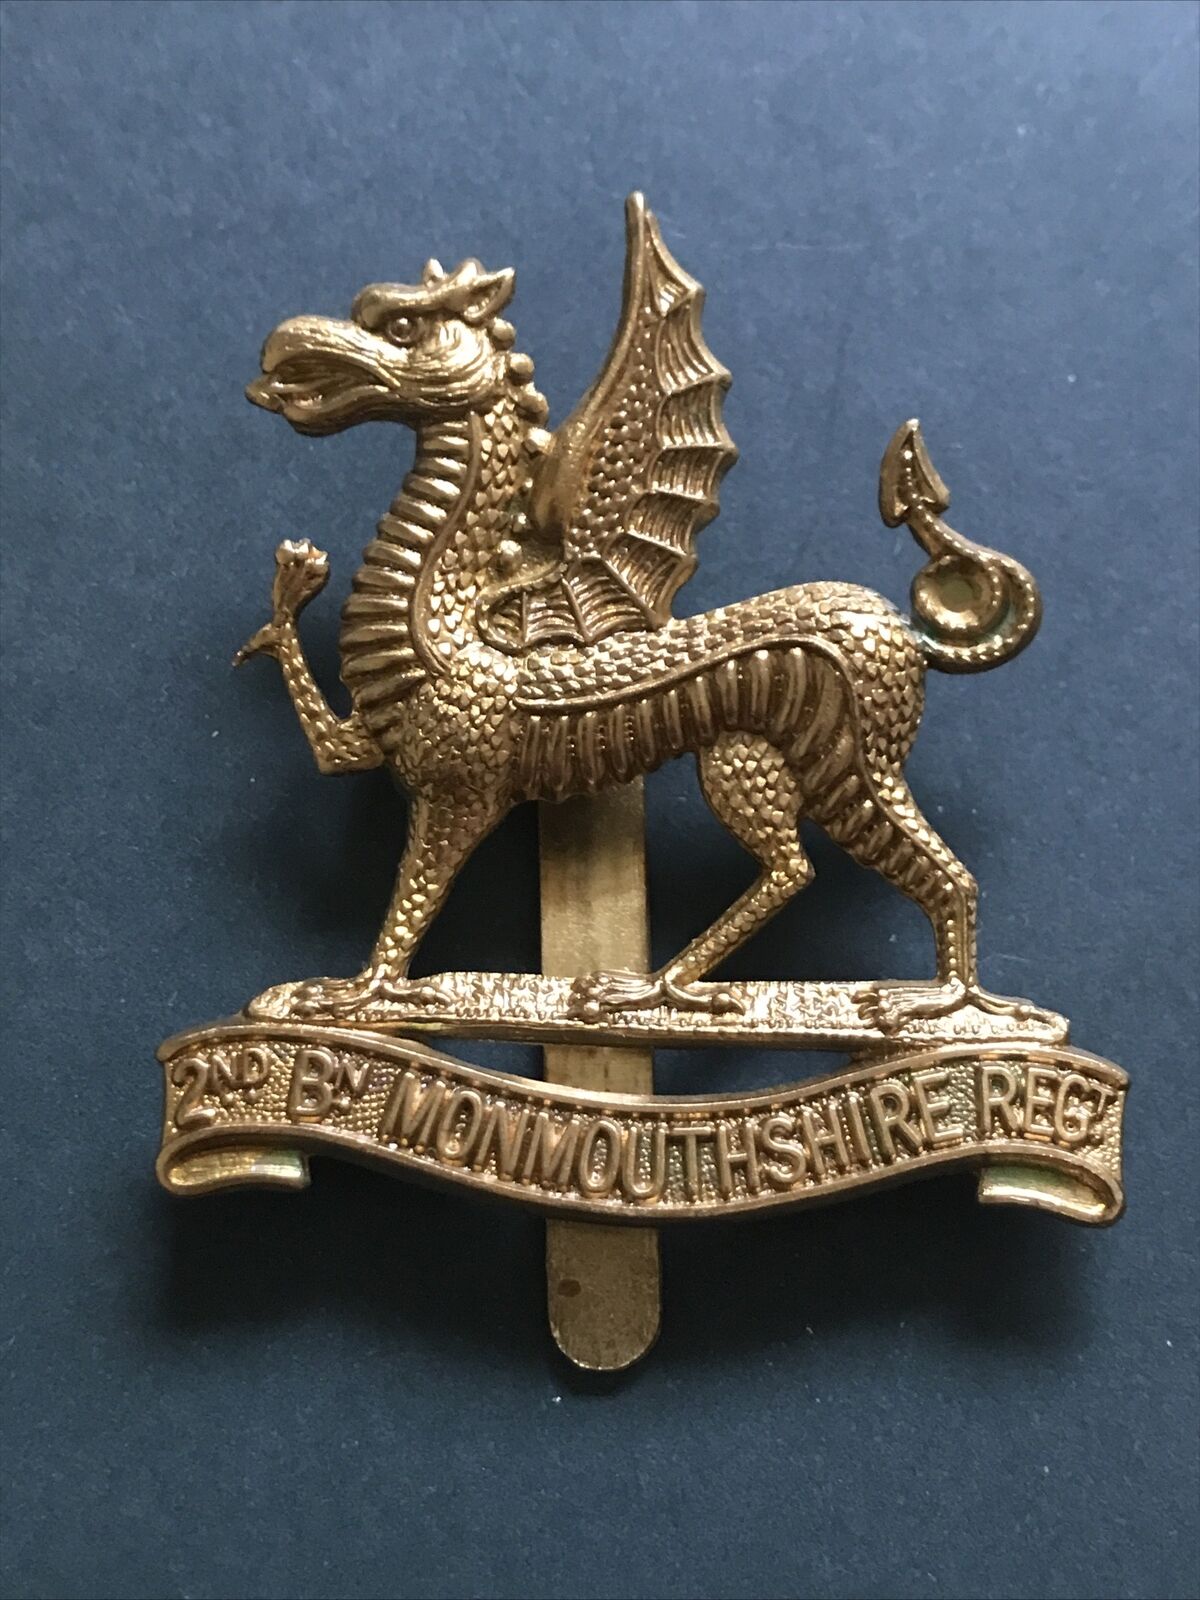 Monmouthshire Regiment 2nd Battalion British Army Cap Badge